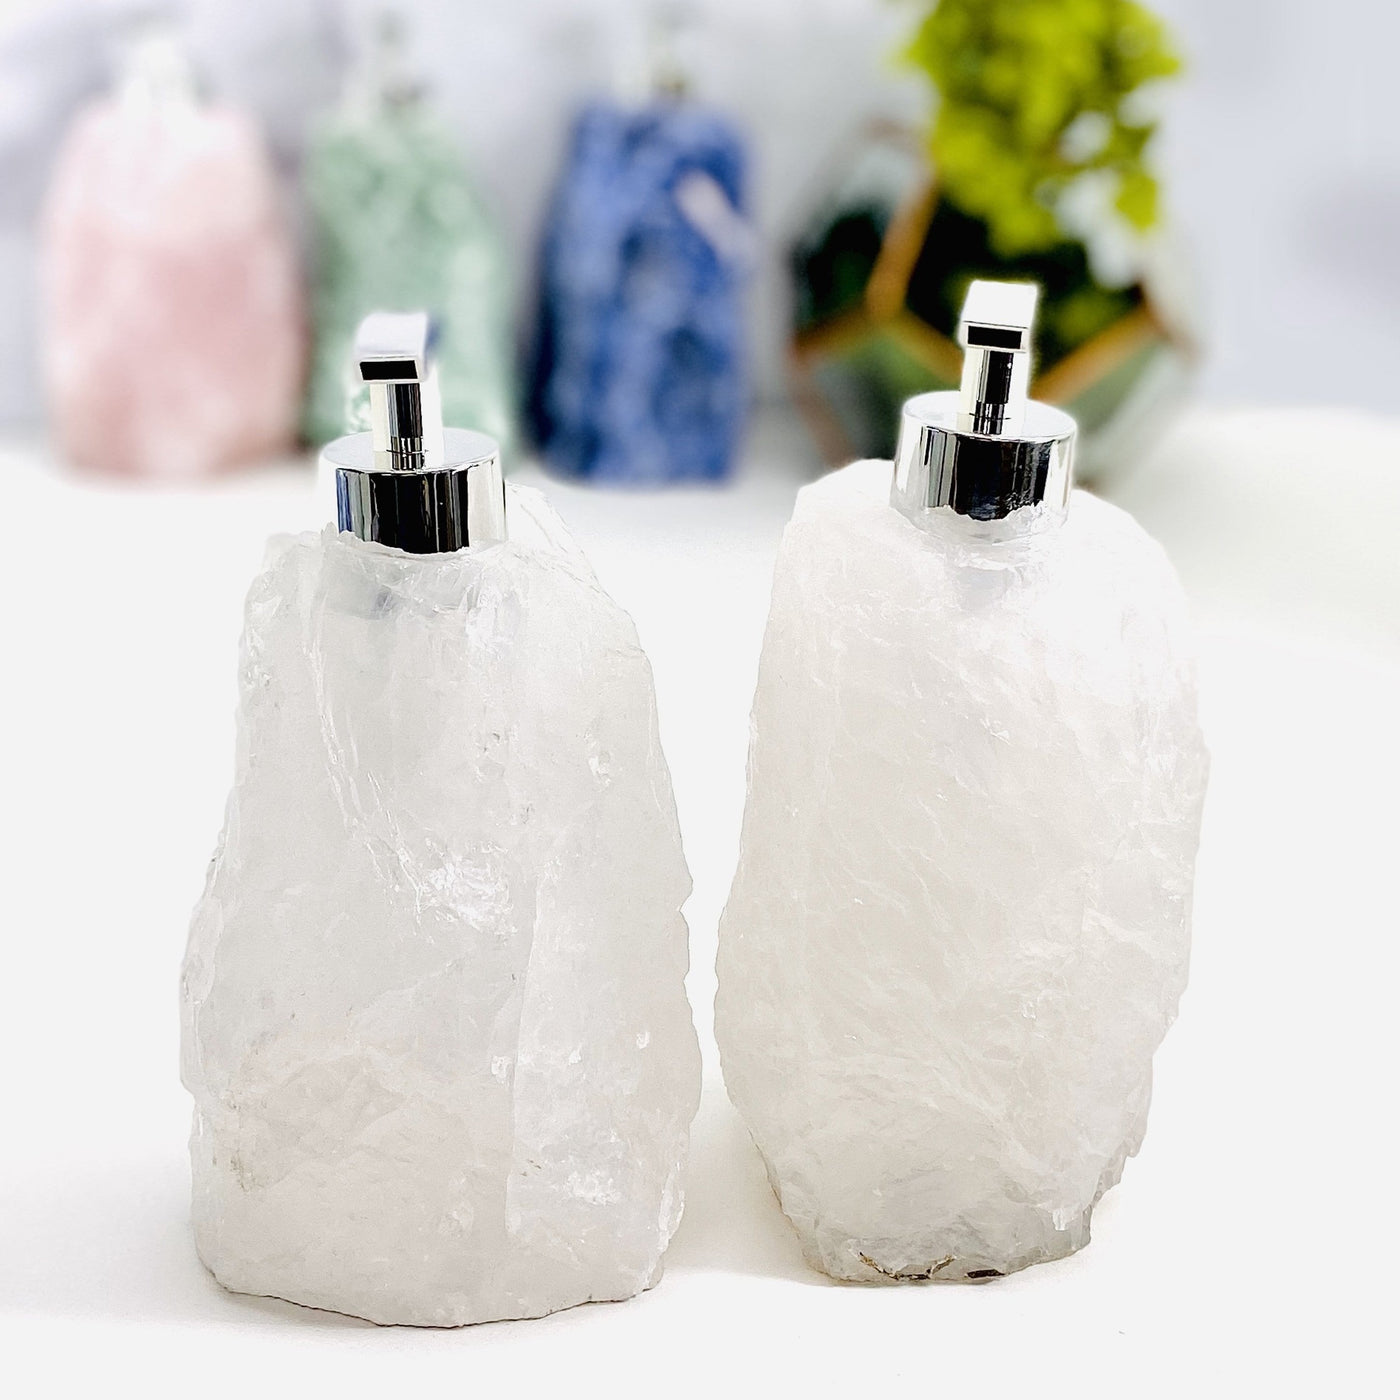 Two White Colour Gemstone Soap Dispenser